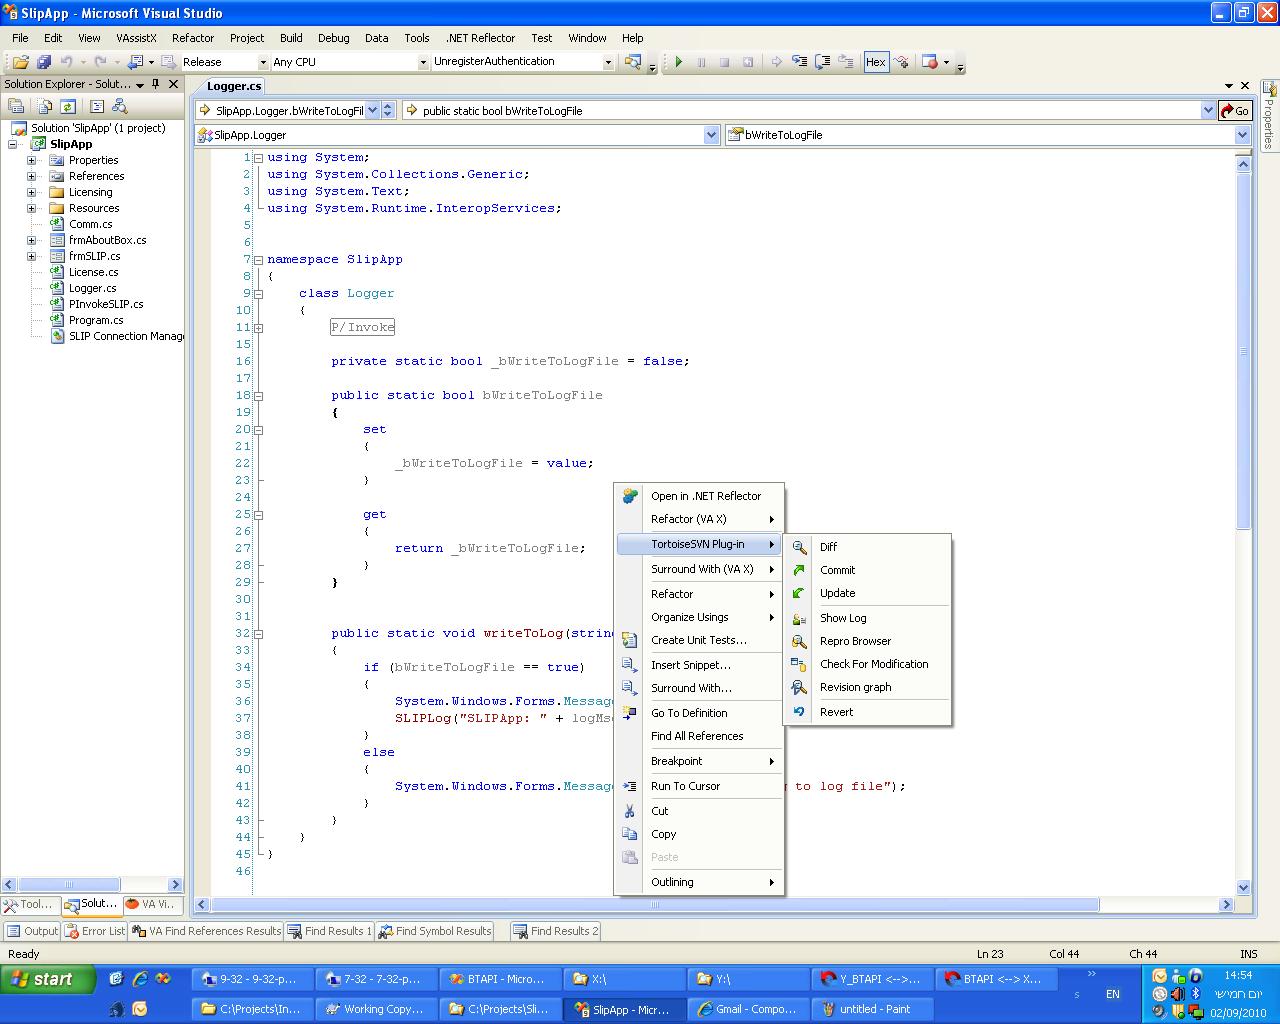 TortoiseSVN Dev: Tortoisesvn plug in for Visual Studio.